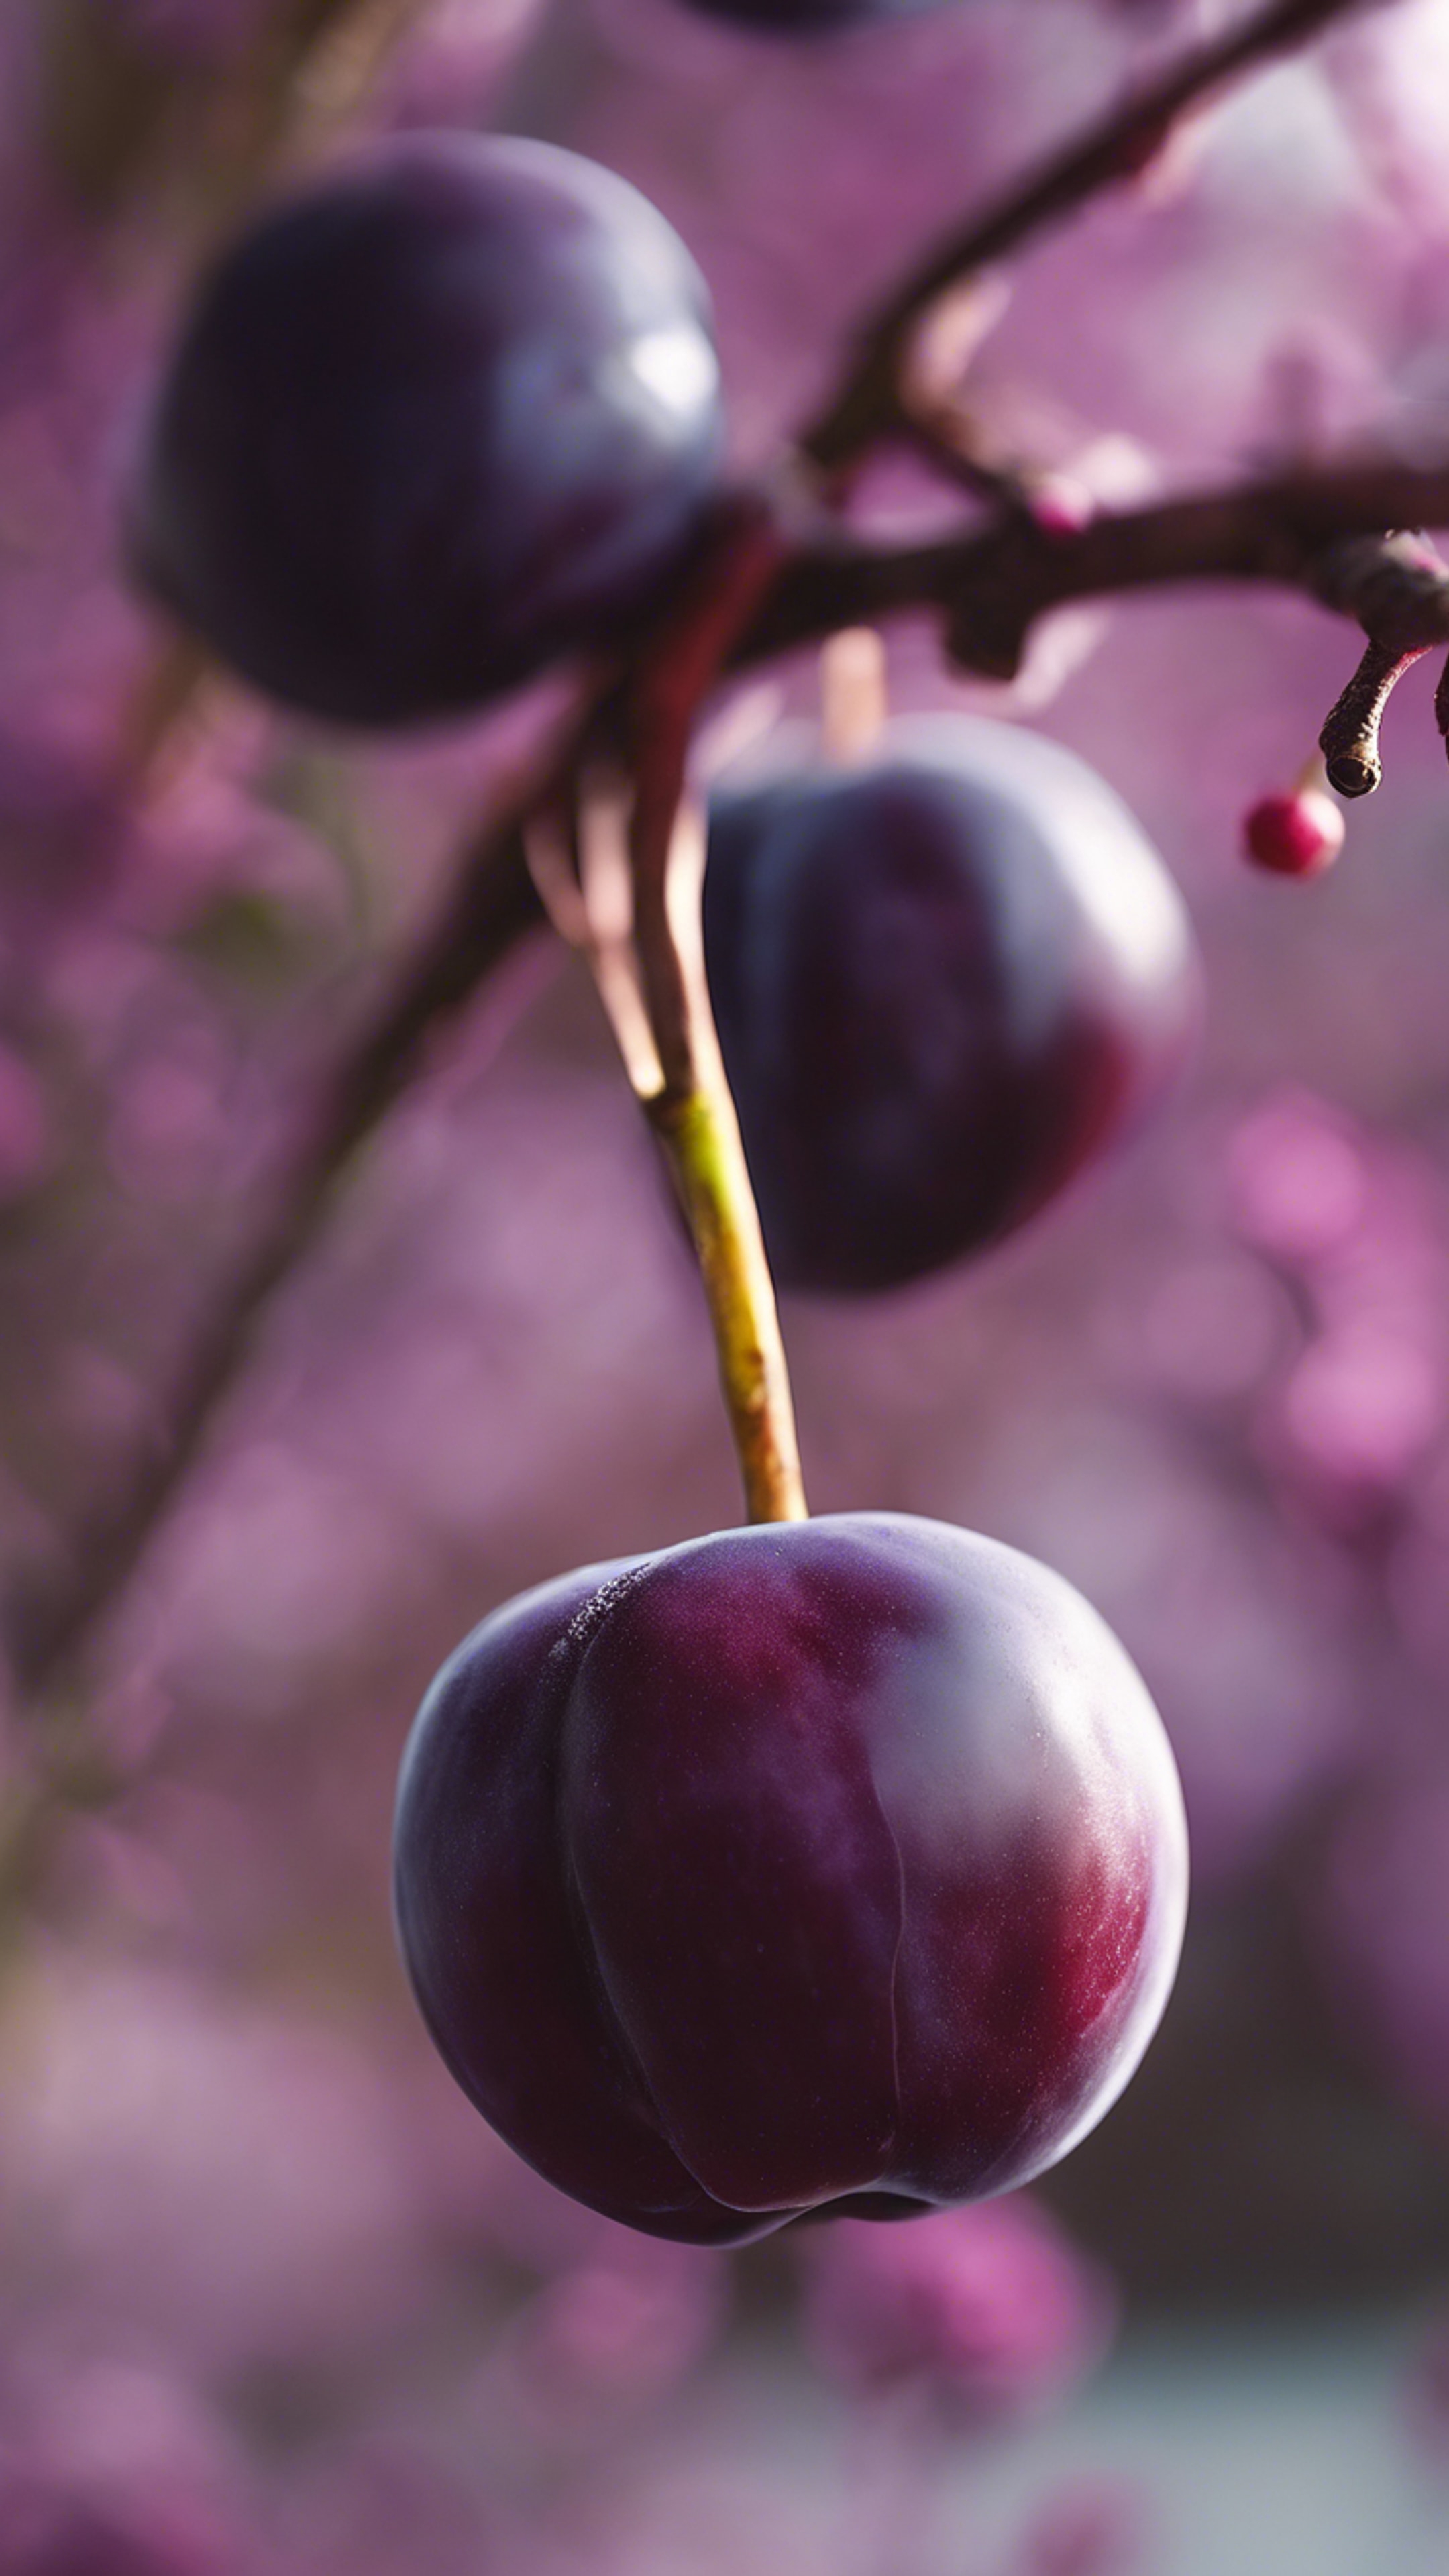 A ripe plum with luscious dark purple skin. Wallpaper[b693de7c1a454b239bc8]